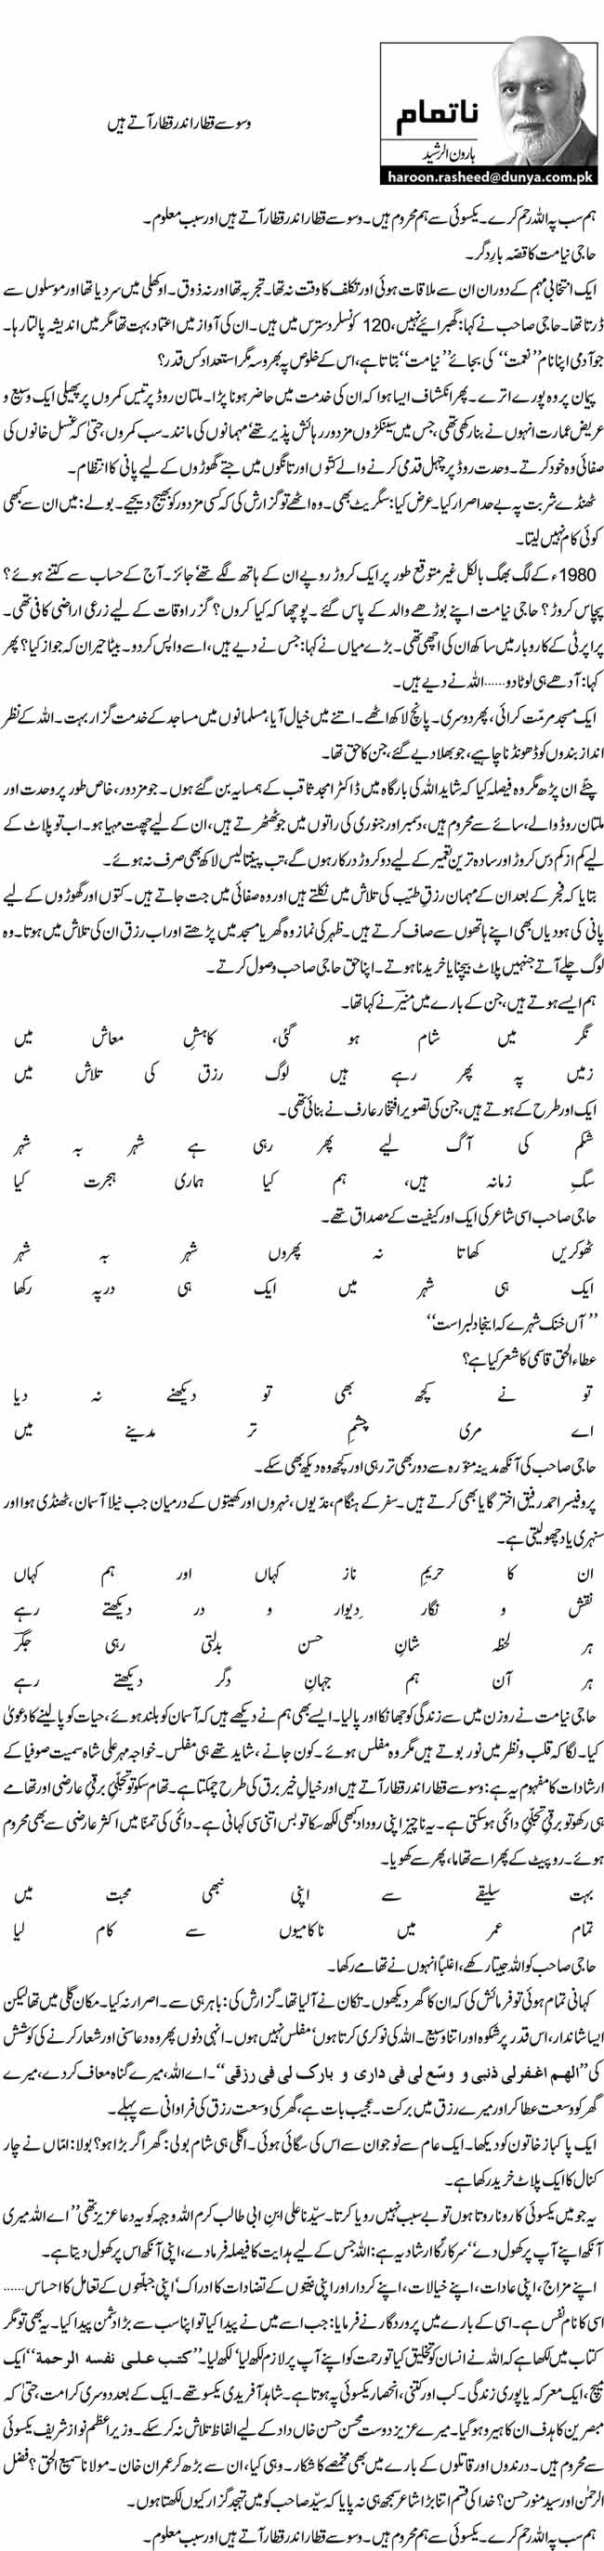 Haji Nimat Kaun Tha By Haroon Rashid Urdu coloumns